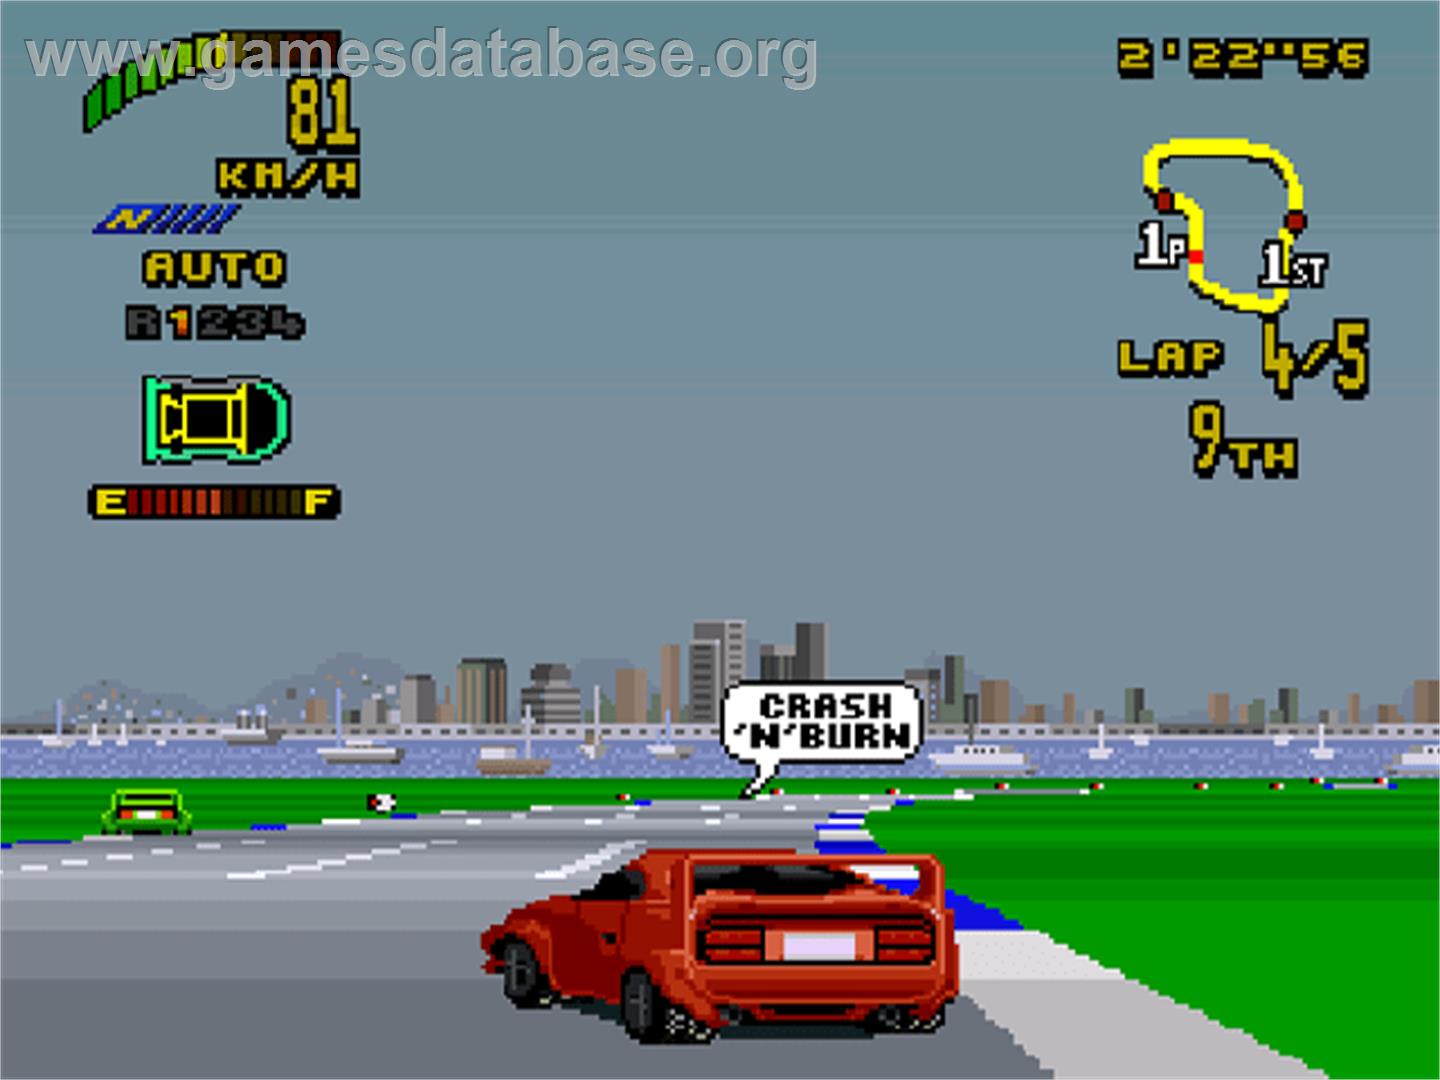 Top Gear 2 - Commodore Amiga CD32 - Artwork - In Game